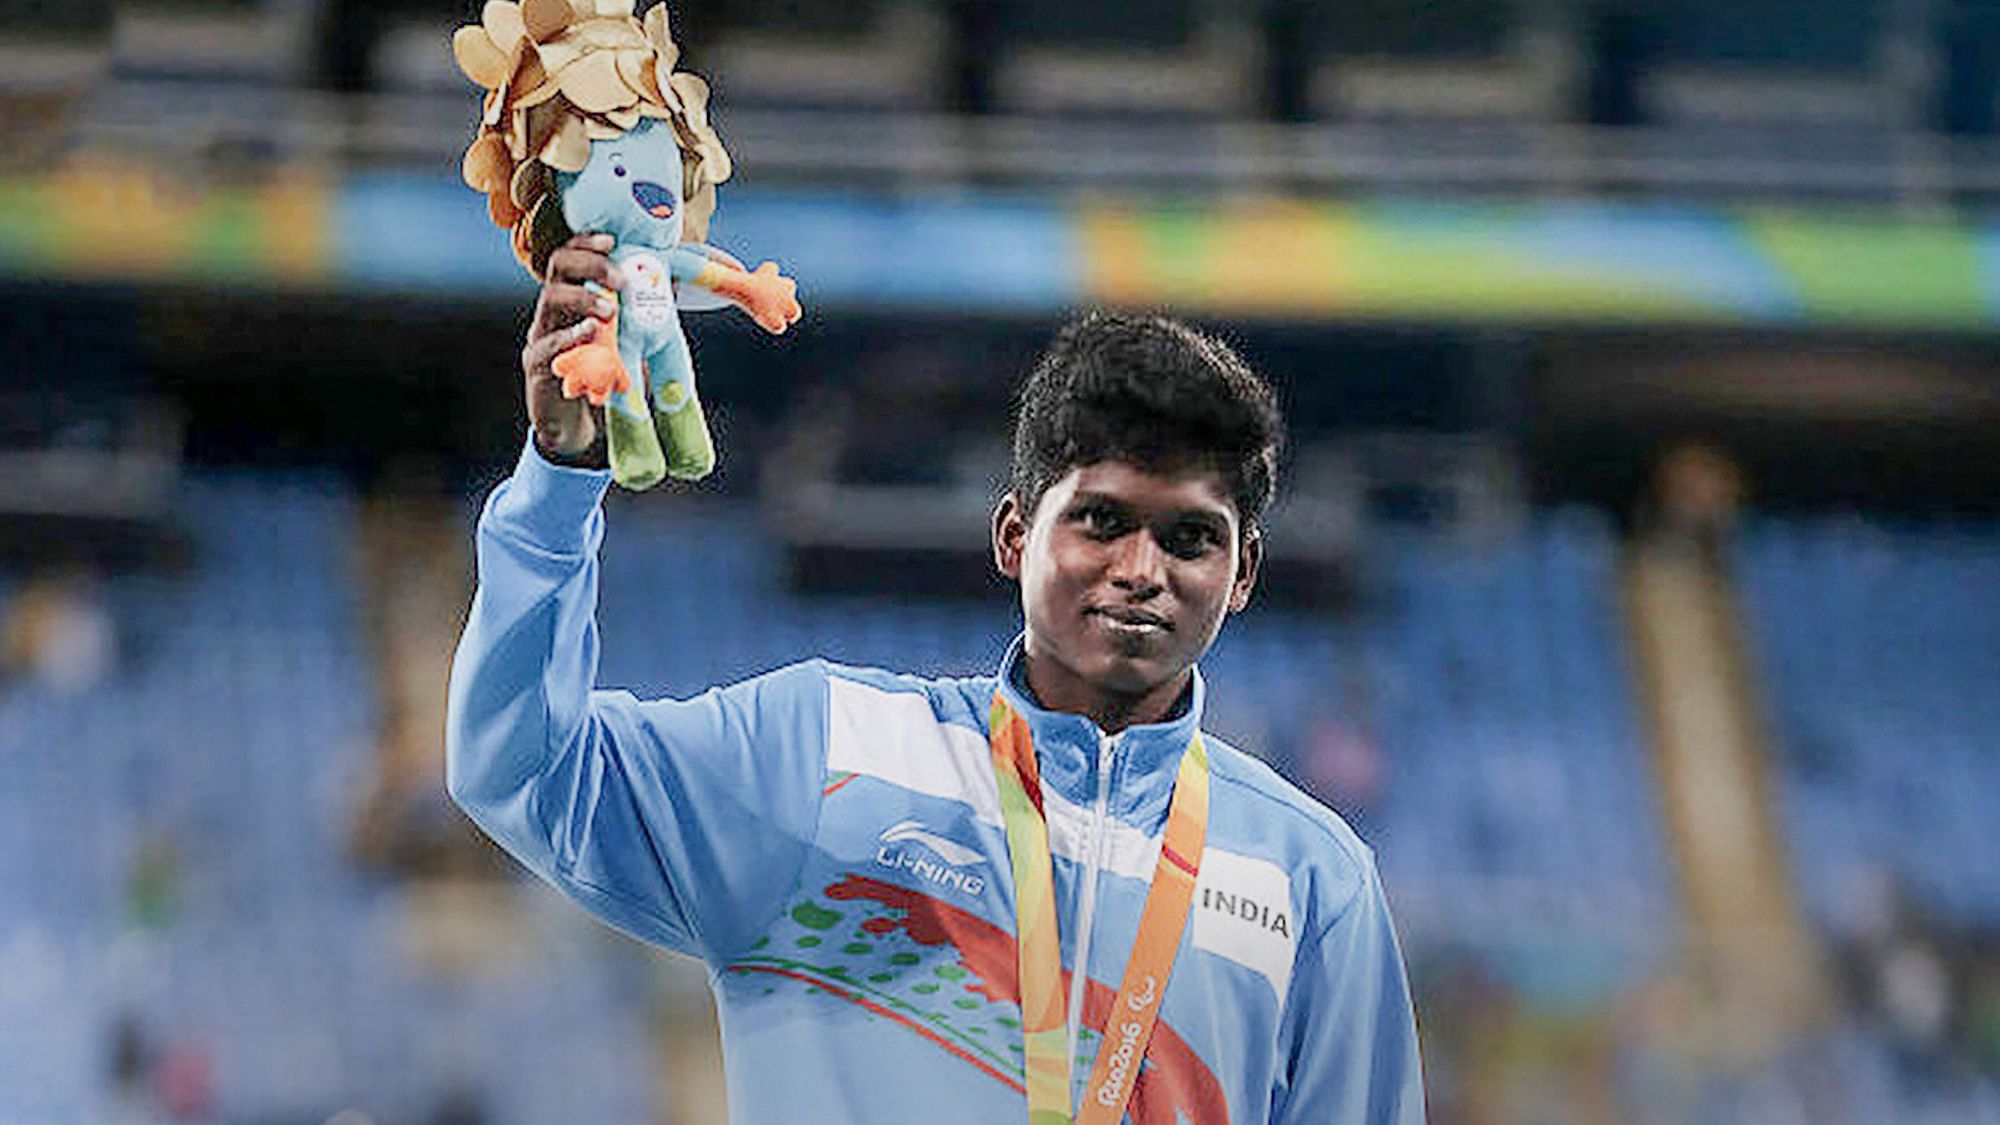 <div class="paragraphs"><p>Mariyappan Thangavelu has won a silver medal in high jump at the Tokyo Paralympics.</p></div>